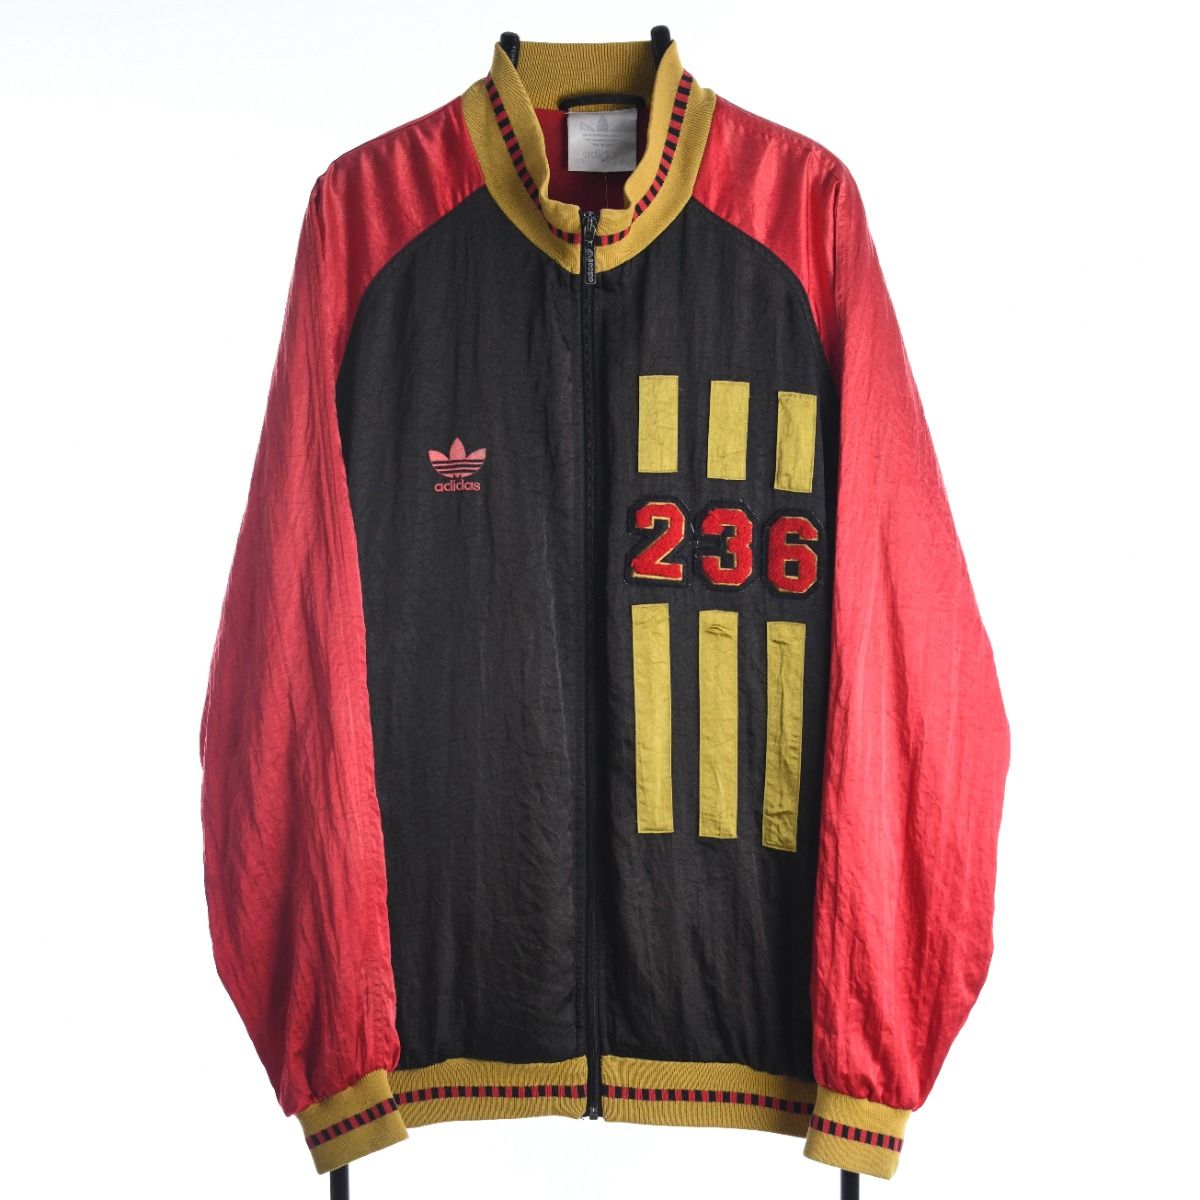 Adidas Late 1980s 236 Shell Jacket